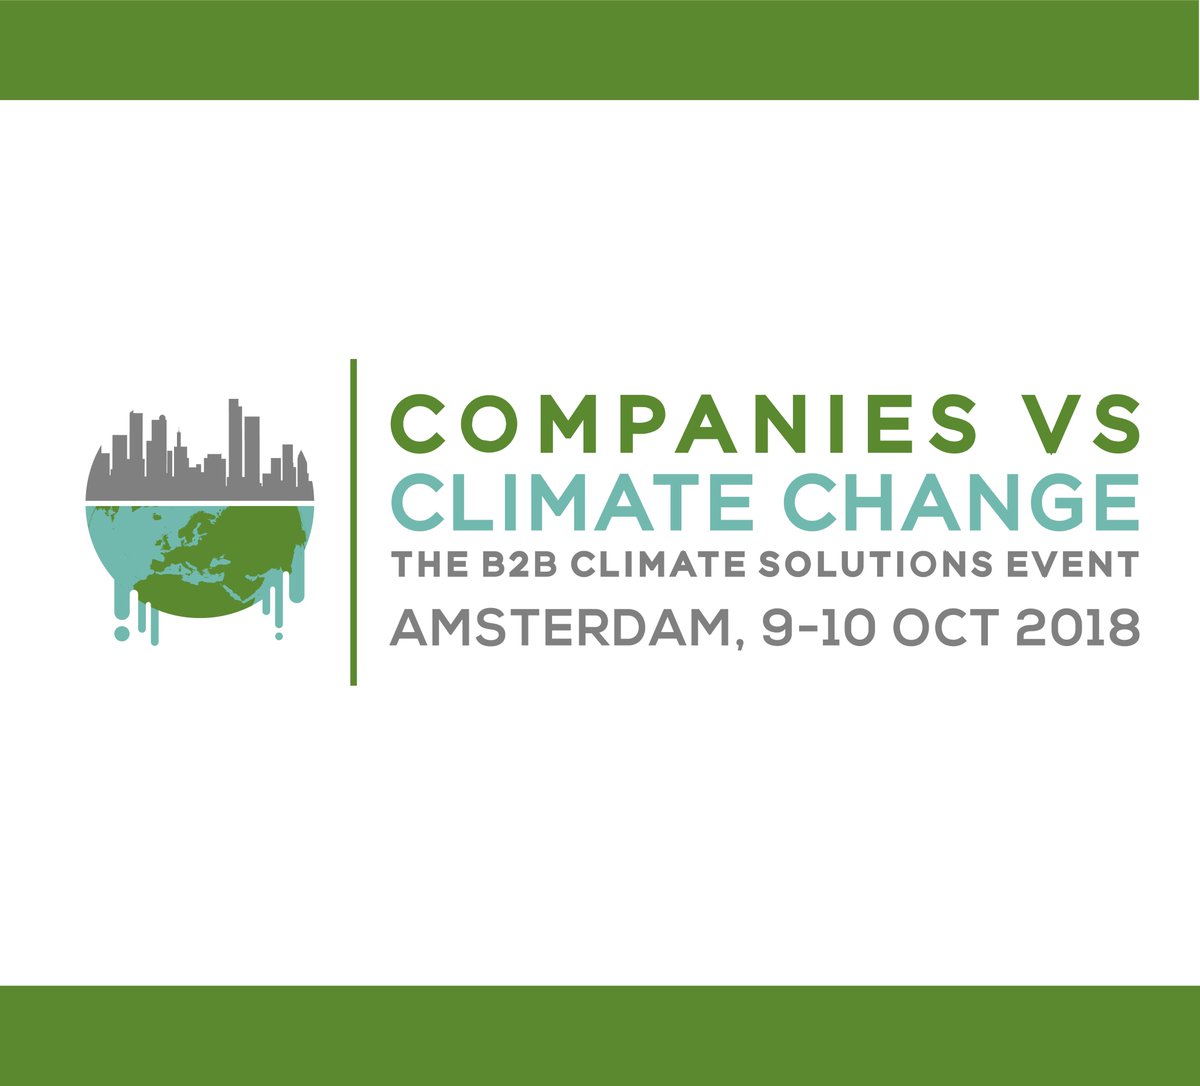 #CvCC18 #Amsterdam speakers: @LEGO_Group @ABBgroupnews @MarsGlobal @VodafoneUK @KelloggsUK @JNJNews @ScaniaGroup @CDP @Jacobs,@PhilipsLight @Danone @ASICSUK ,@Allianz Contact us about sponsorships jason at solveclimatechange dot com #renewables #CliamteAction #RE100 #susty